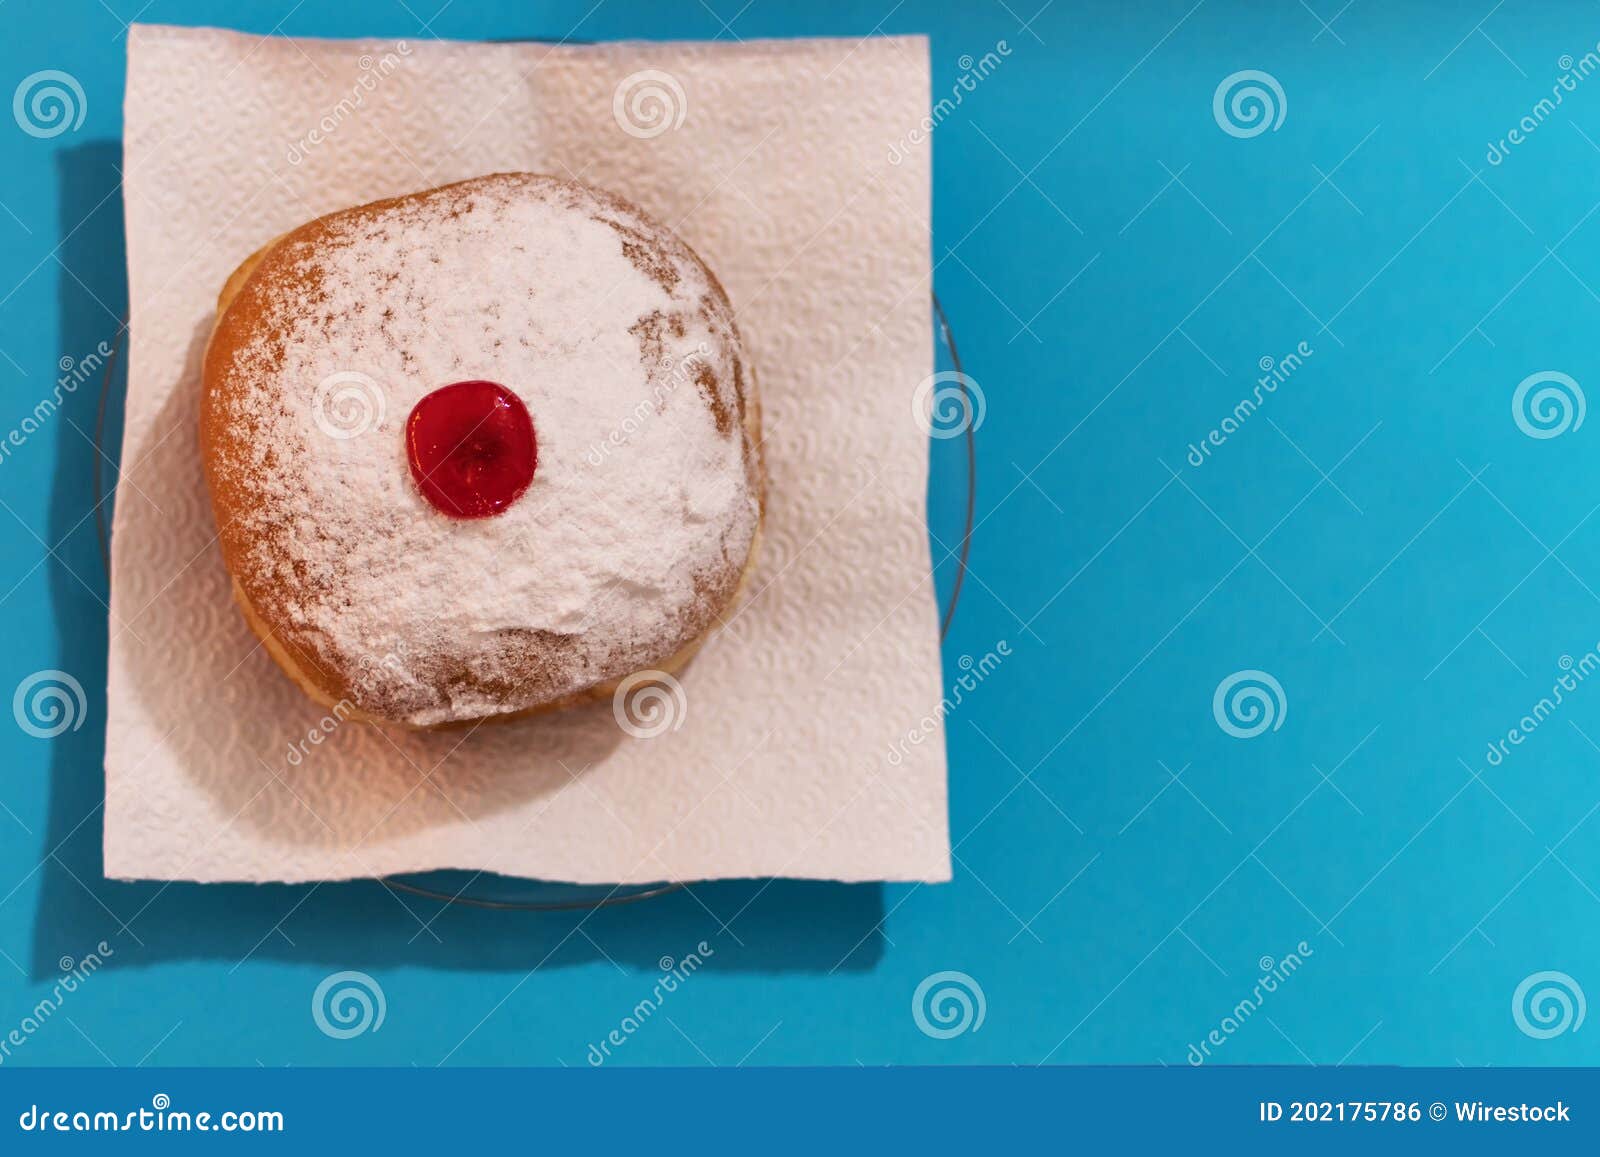 top view of a hanukkah mocks sufganiyah doughnut - traditional jewish s of sweet doughnut